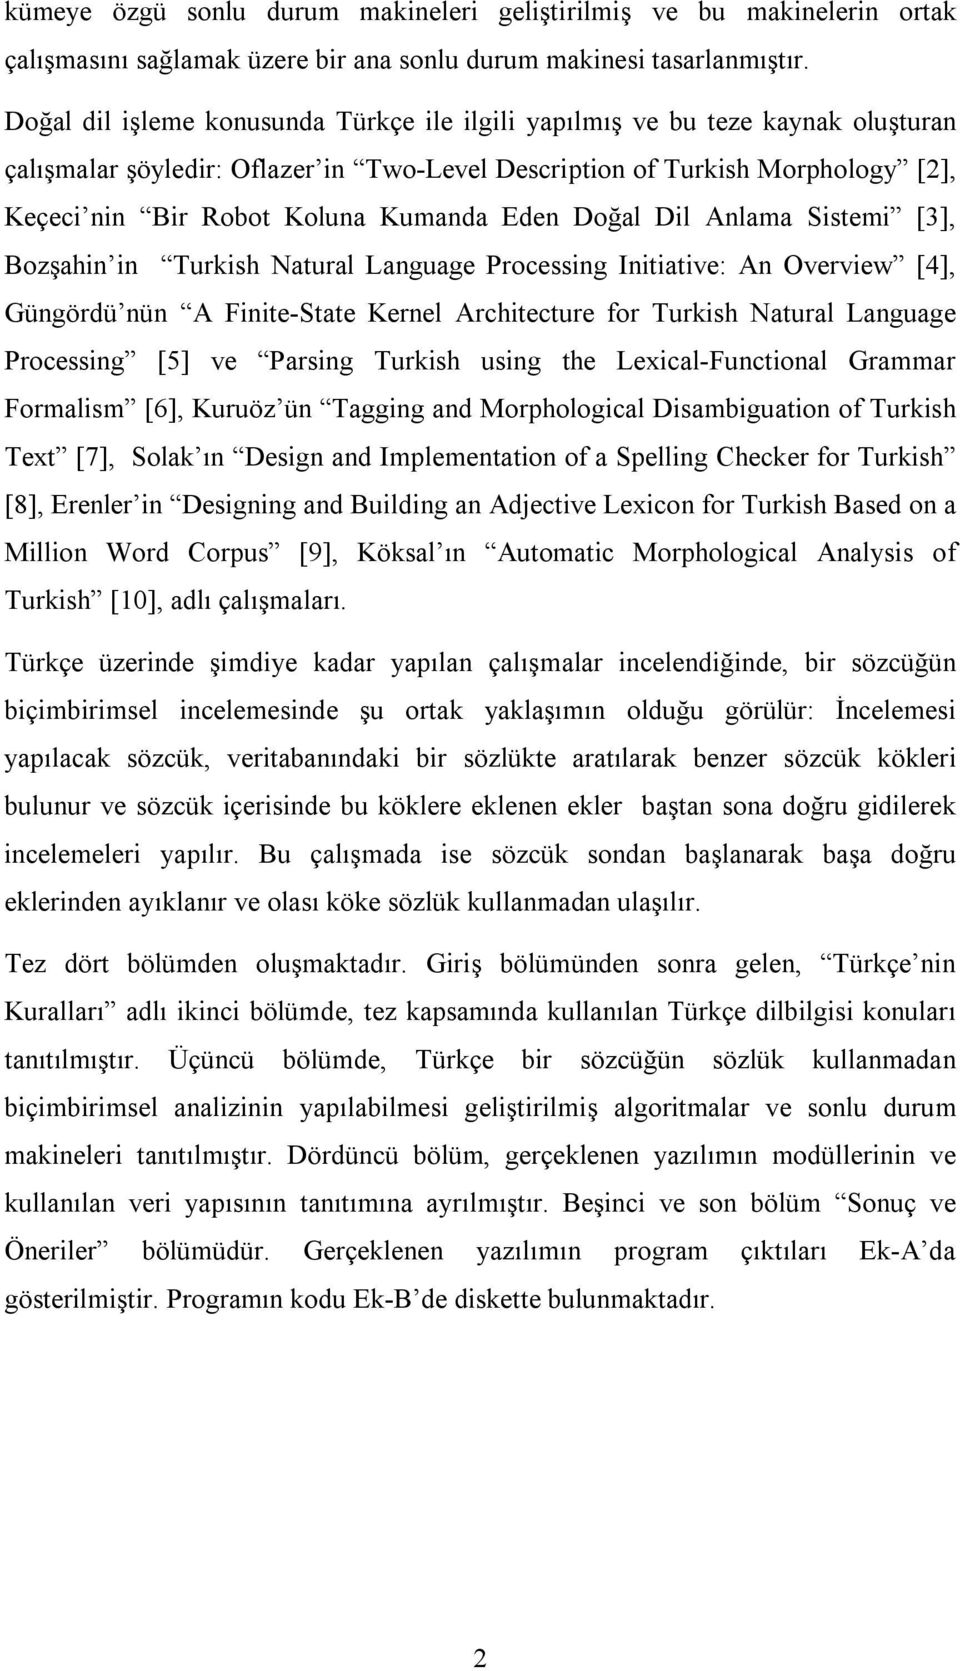 Eden Doğal Dil Anlama Sistemi [3], Bozşahin in Turkish Natural Language Processing Initiative: An Overview [4], Güngördü nün A Finite-State Kernel Architecture for Turkish Natural Language Processing